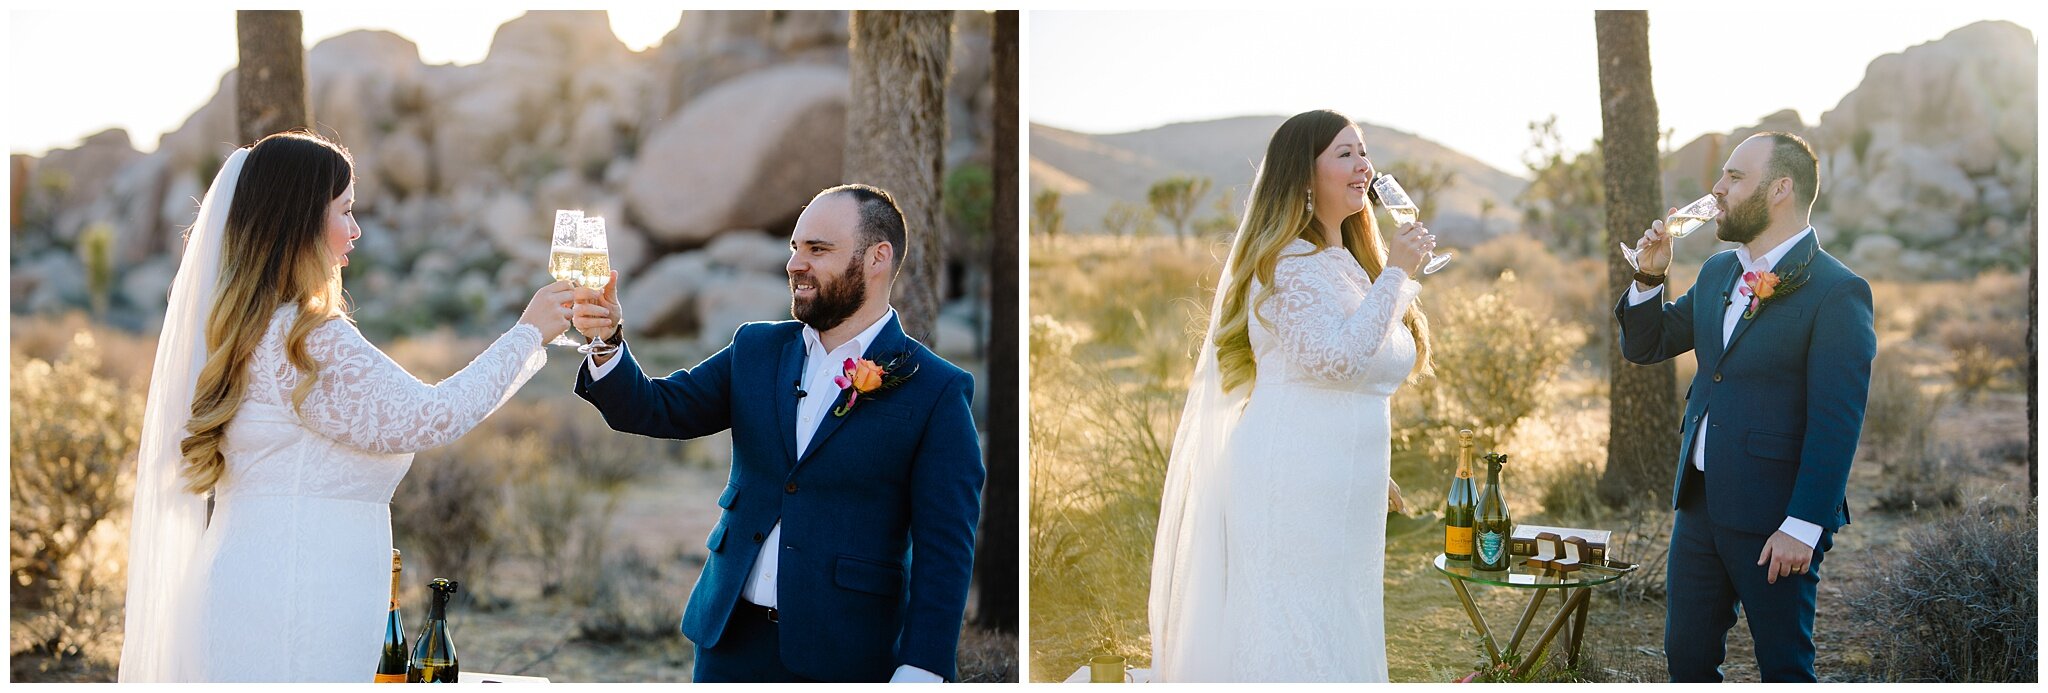 Joshua Tree Elopement - Michelle and Michael - Adventure Wedding Photographer_0054.jpg